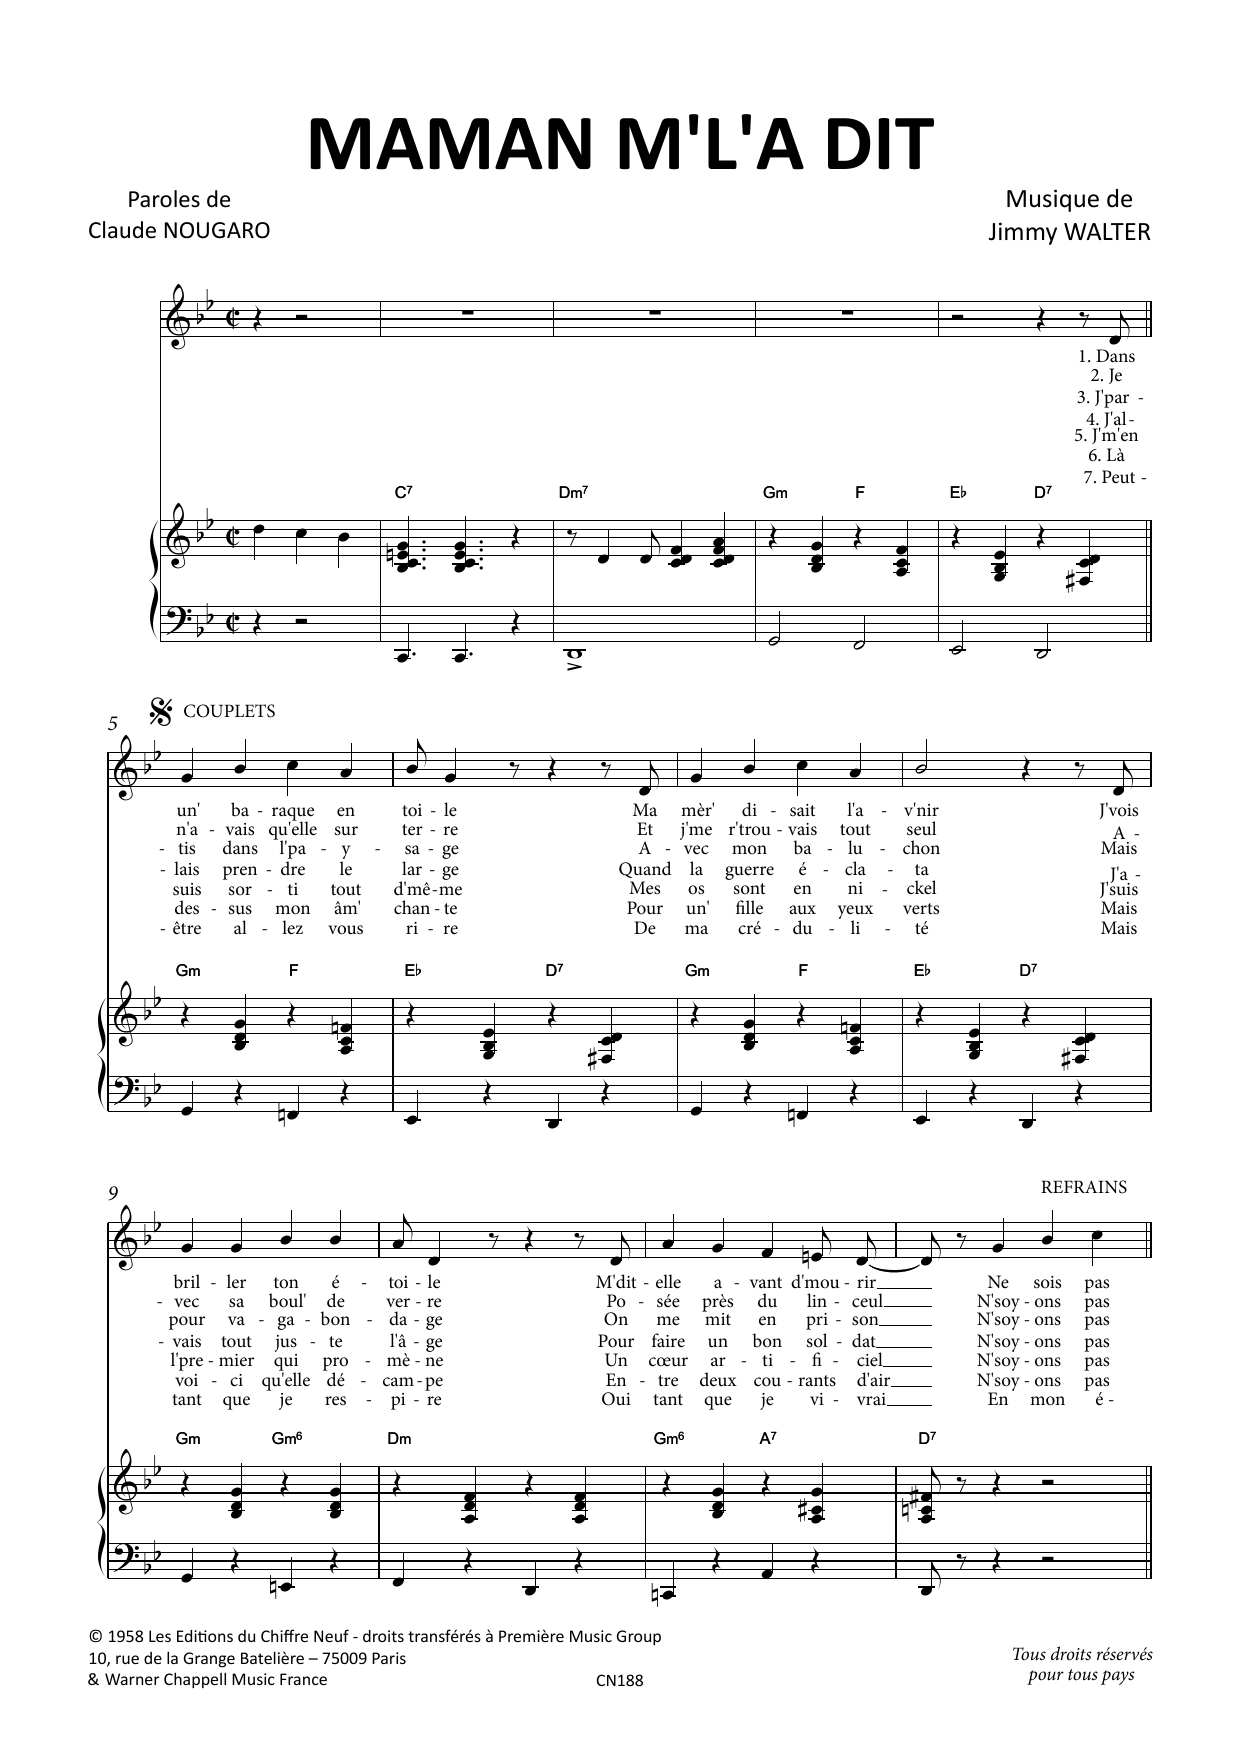 Claude Nougaro Maman m'l'a Dit Sheet Music Notes & Chords for Piano & Vocal - Download or Print PDF